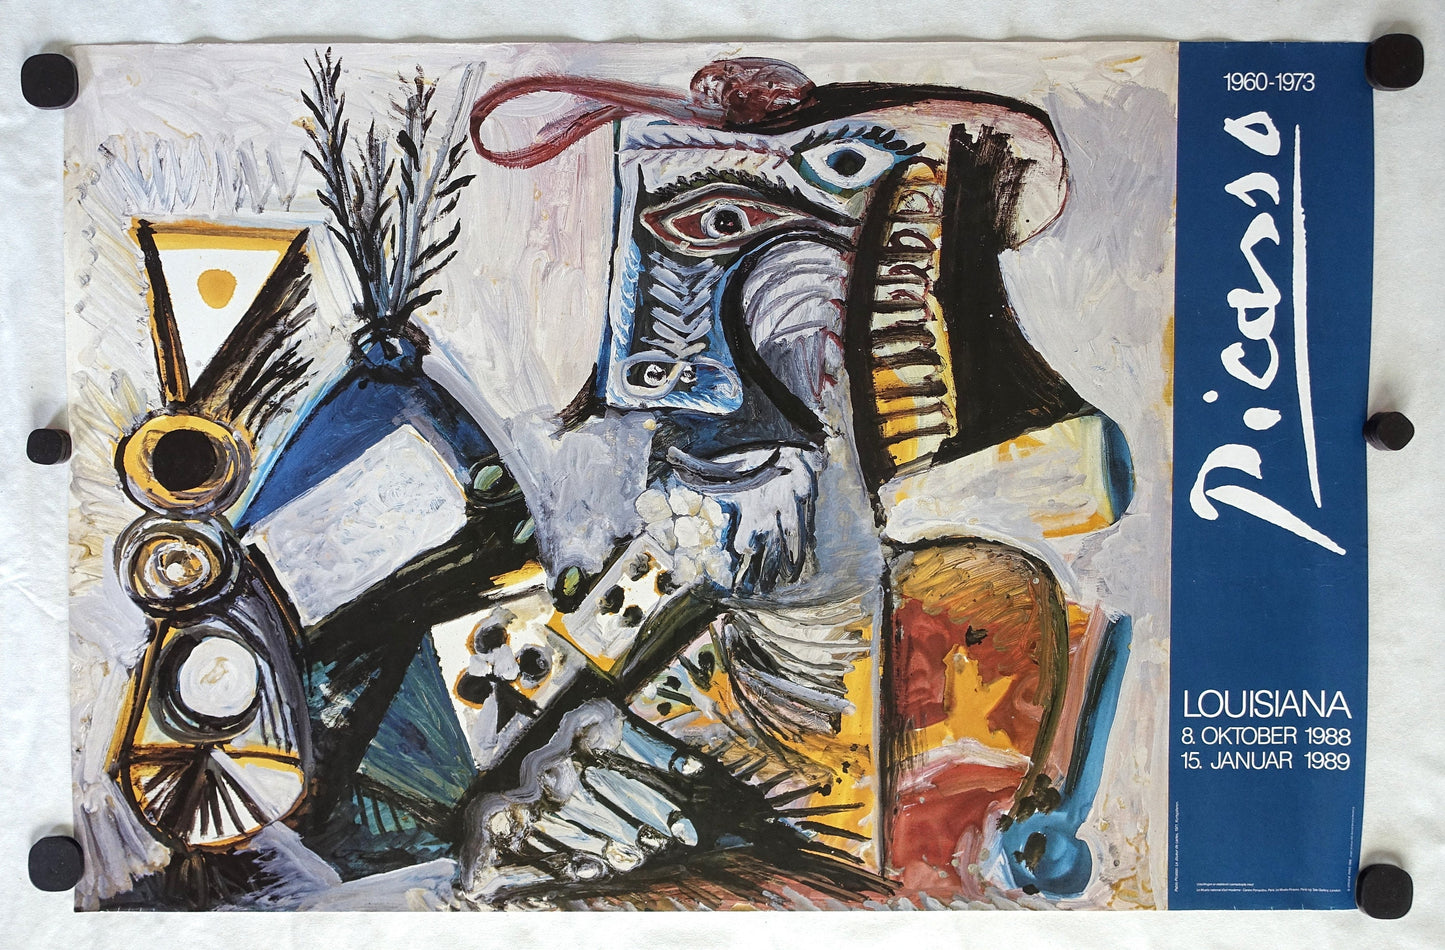 1988 Picasso Cardplayer at Louisiana Museum of Modern Art - Original Vintage Poster